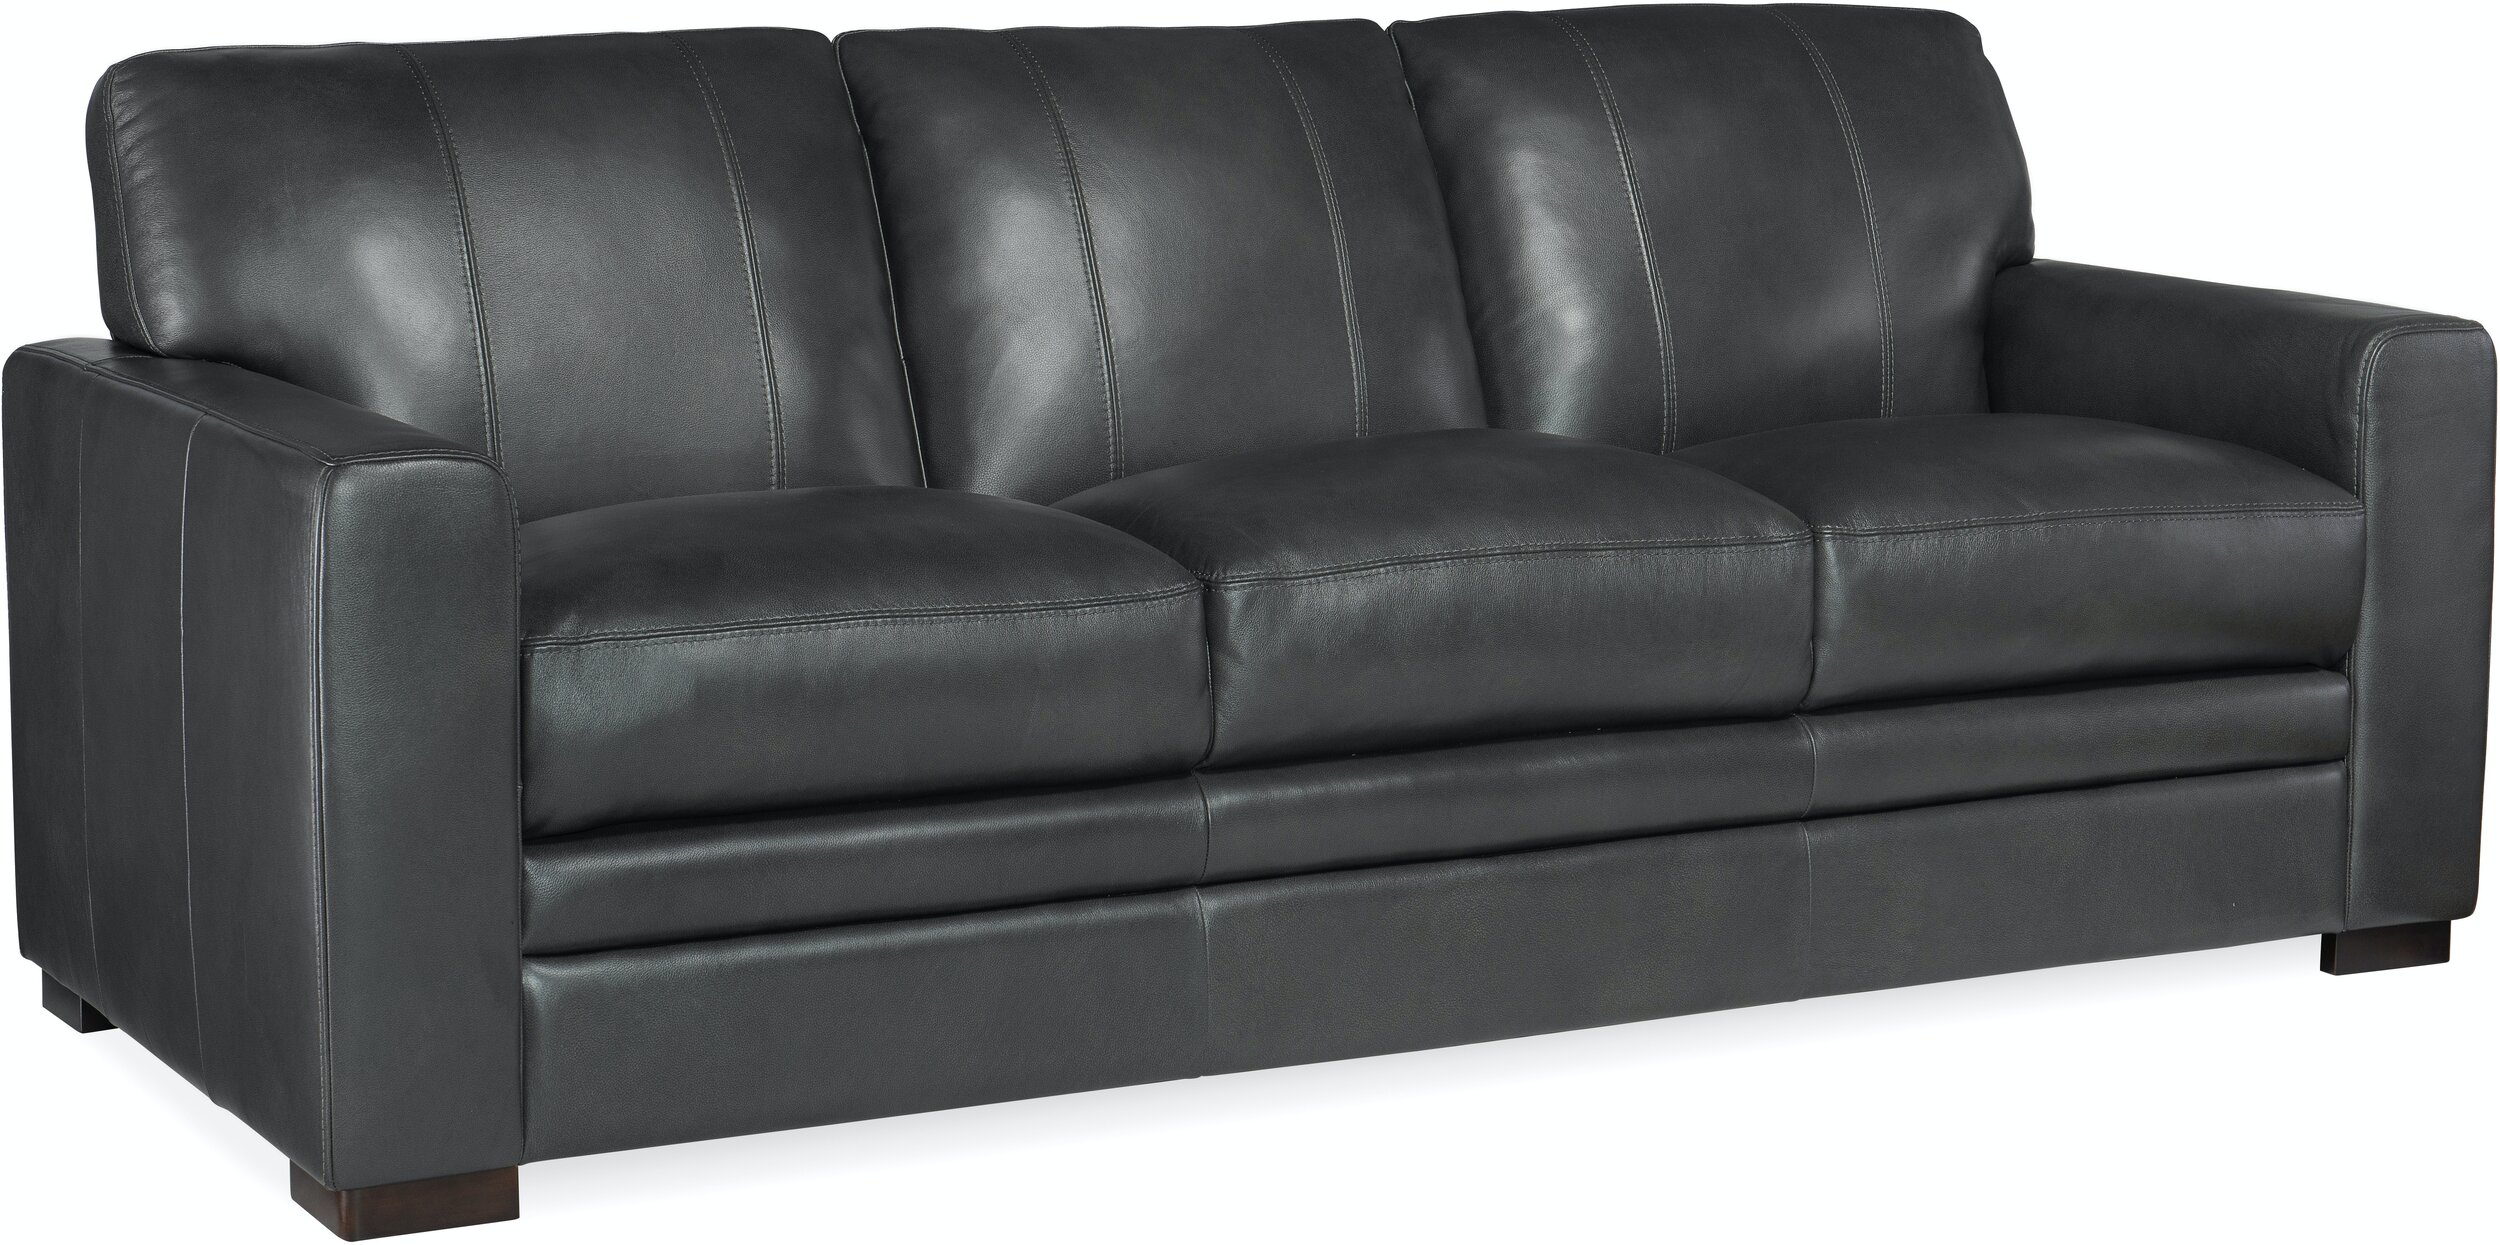 Larkin stationary sofa